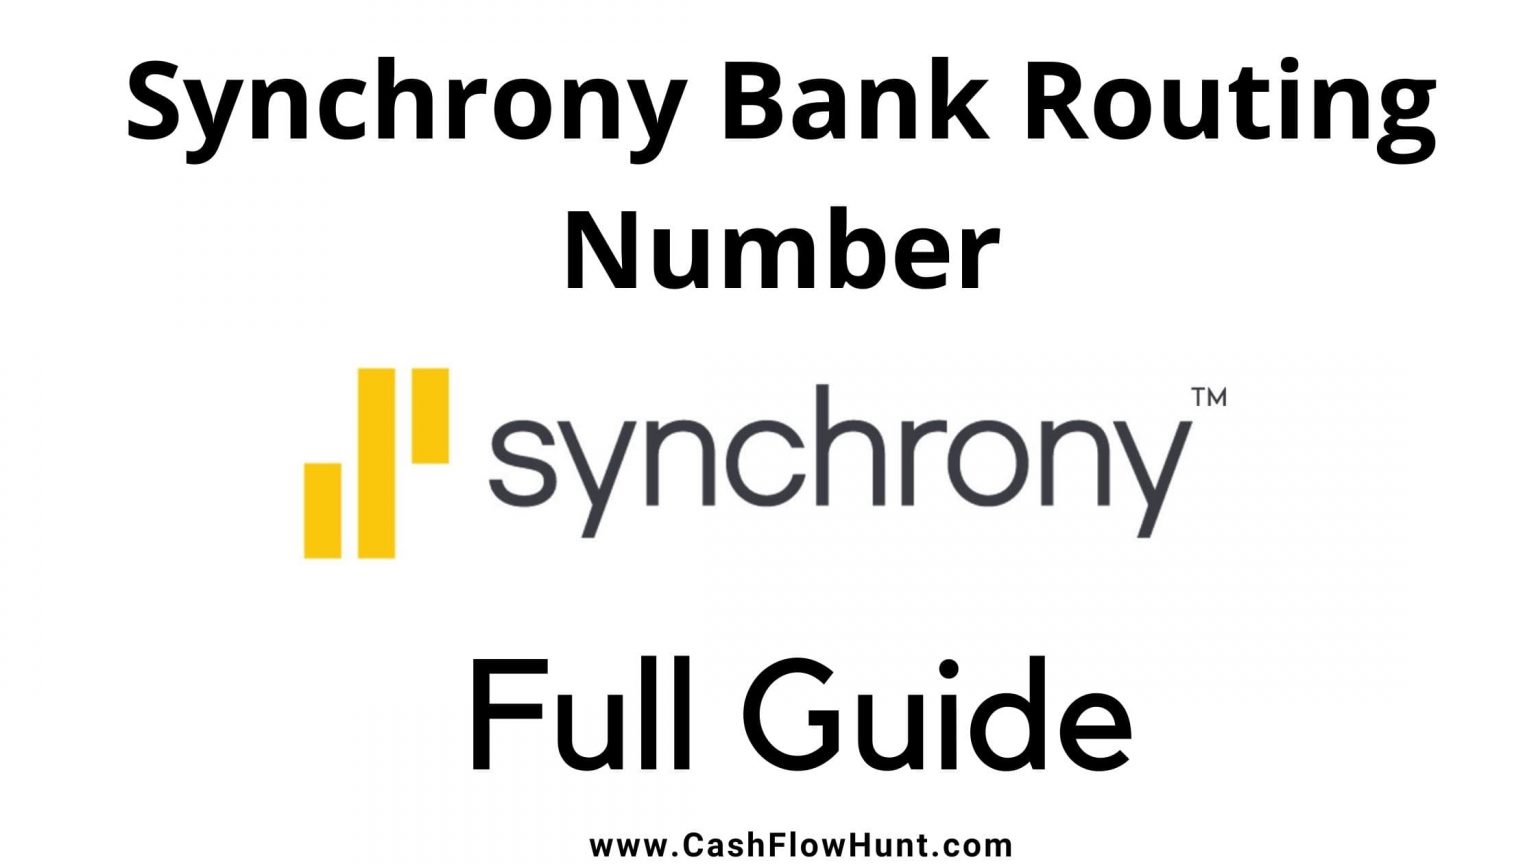 synchrony bank loan